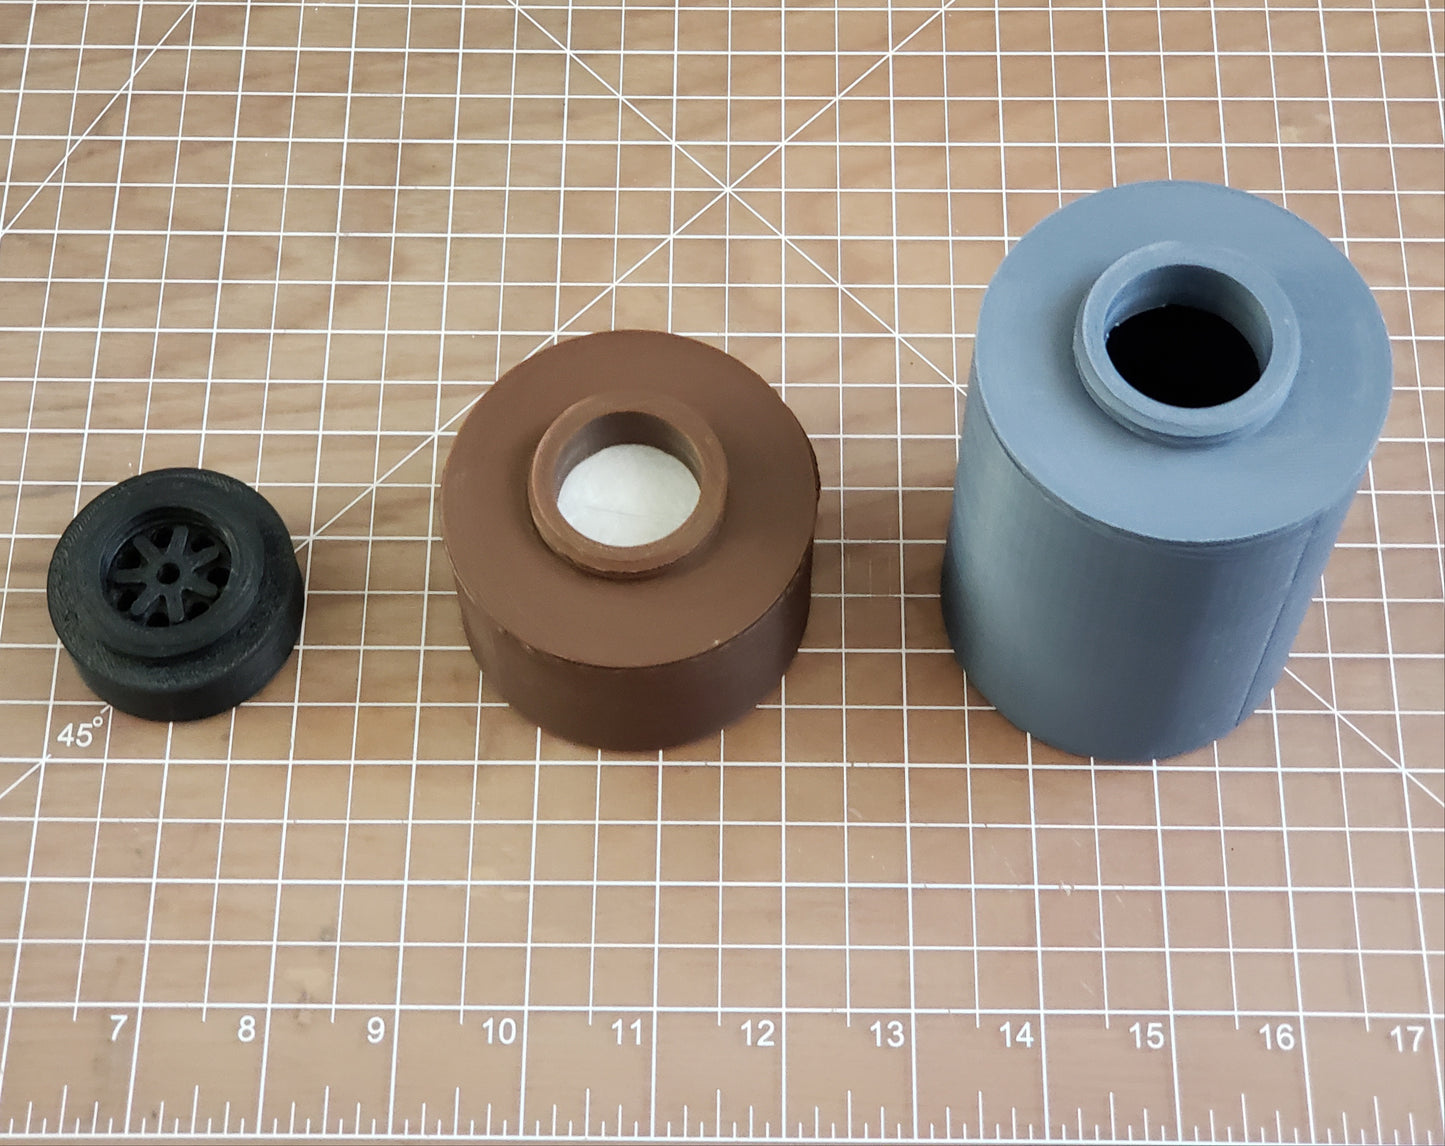 Standard Canister filter for 40mm NATO gas masks - 3D Printed ABS Plastic (canister only) - 3M 2200 mpr (merv13) filter media - m40/42 gas mask